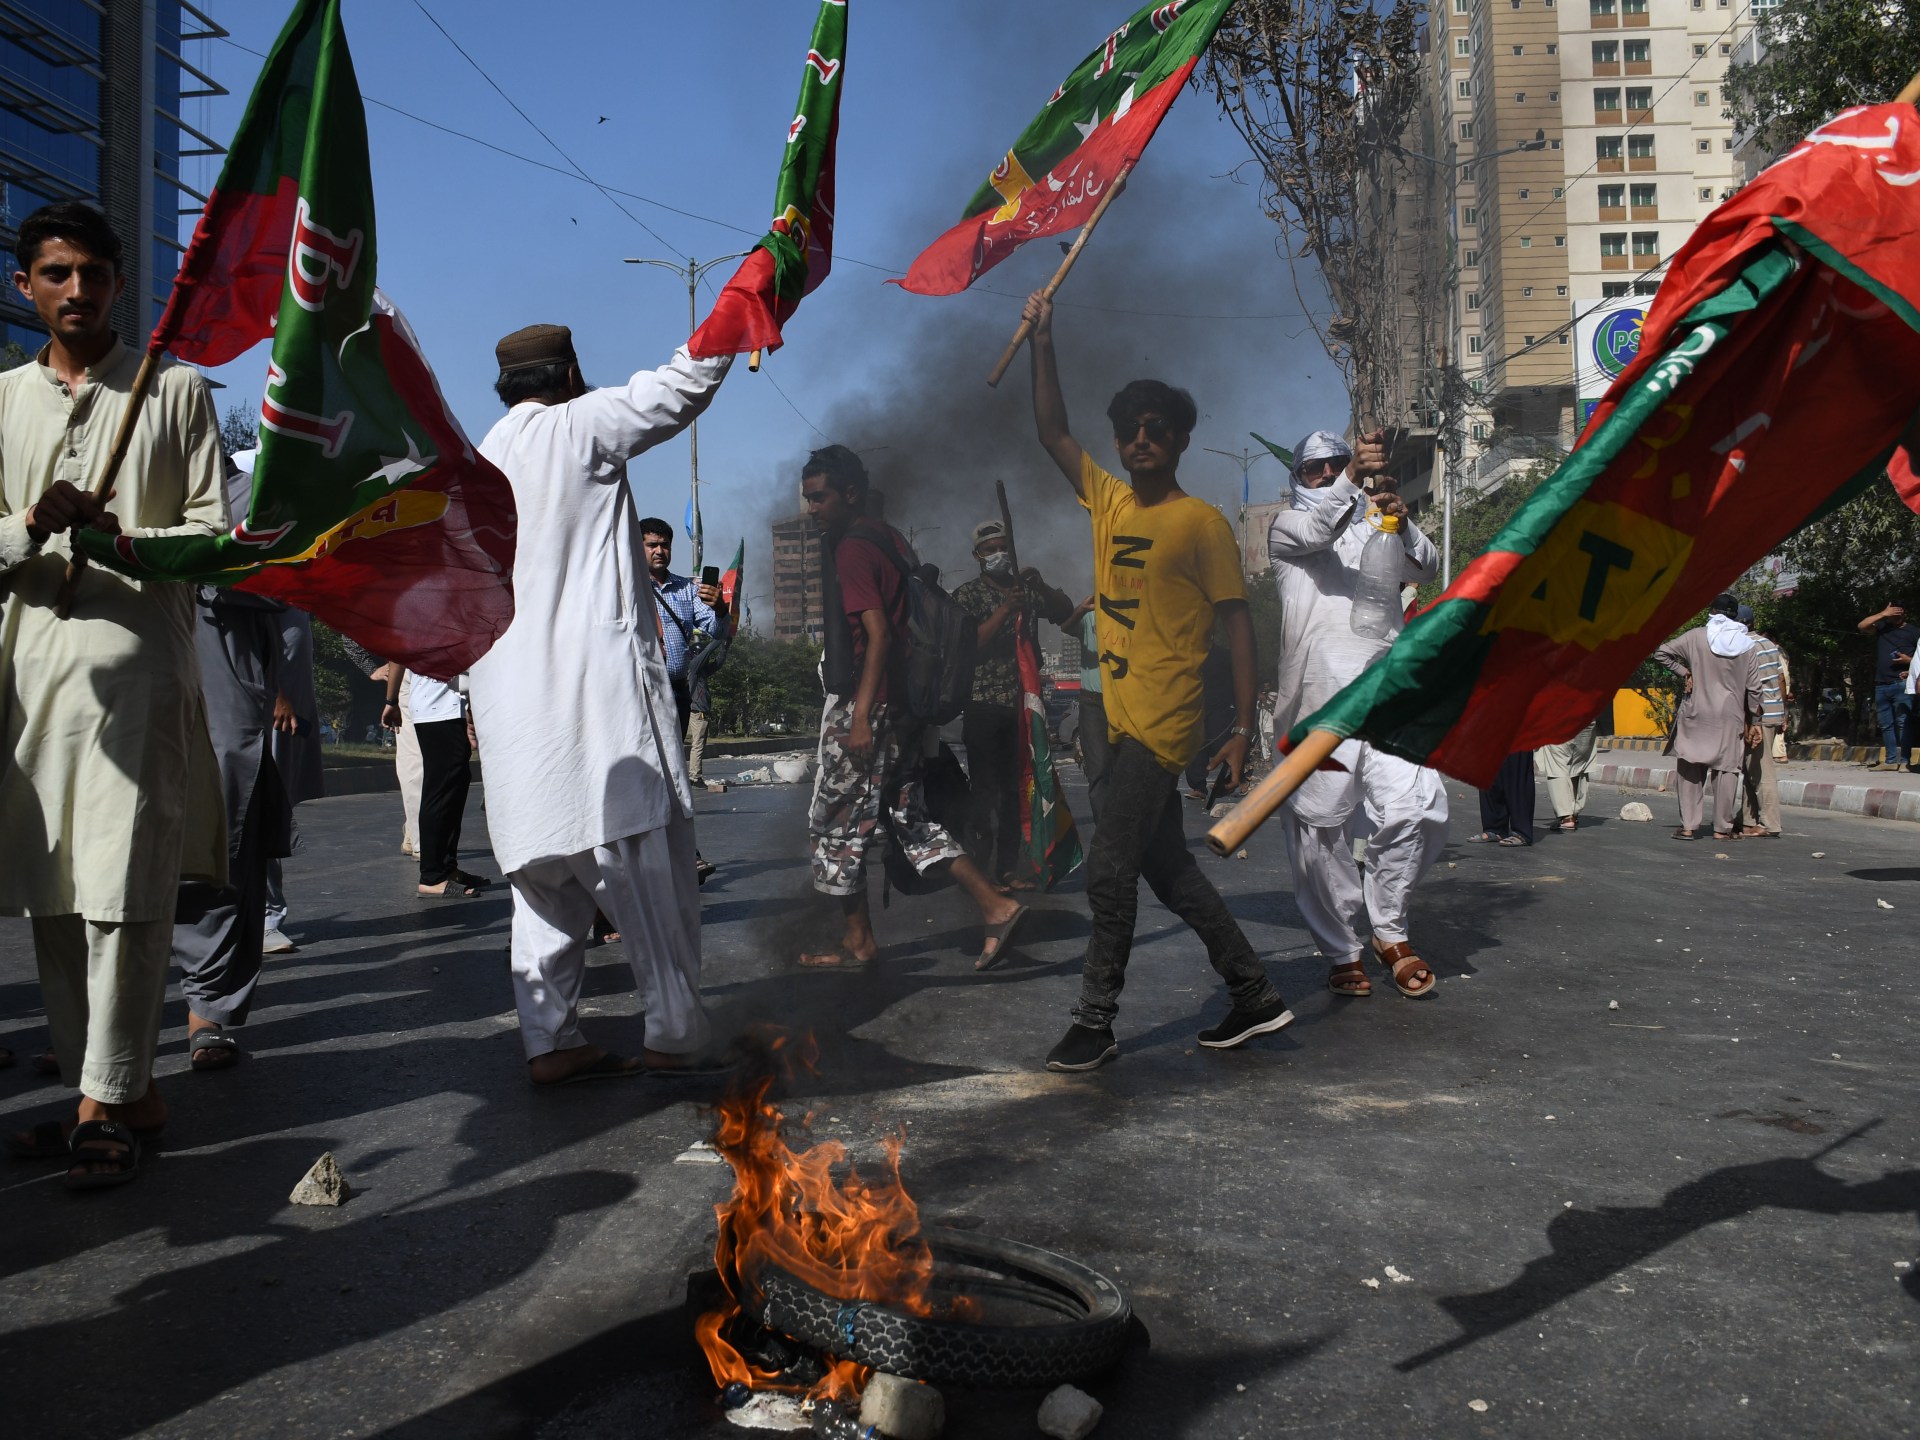 pemerintah Pakistan akan mengadili pengunjuk rasa kekerasan di bawah undang-undang tentara |  Berita Protes